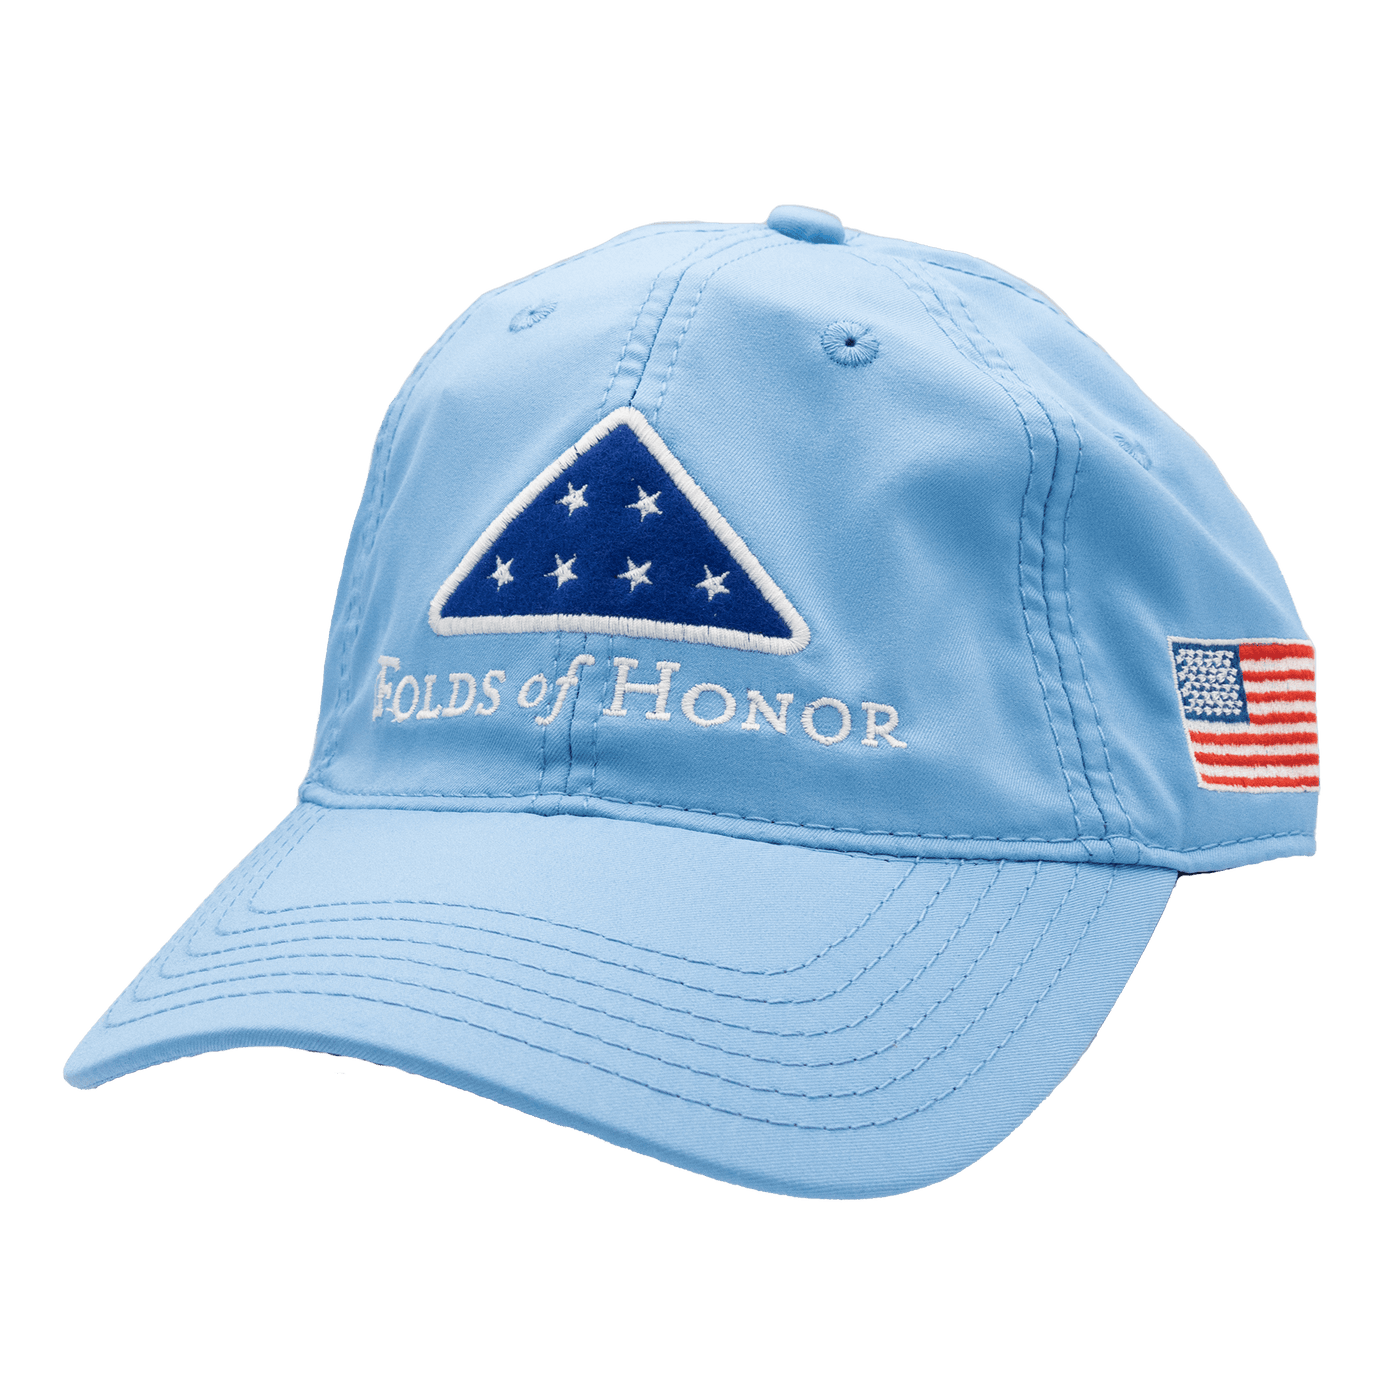 Folds of Honor Adjustable Hat - Light Blue